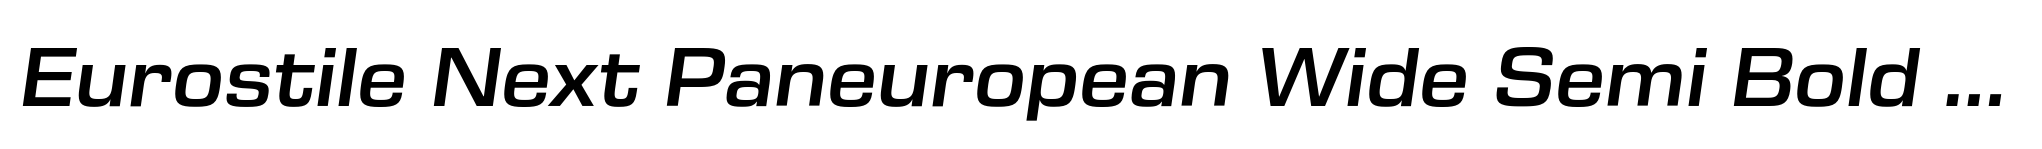 Eurostile Next Paneuropean Wide Semi Bold Italic image